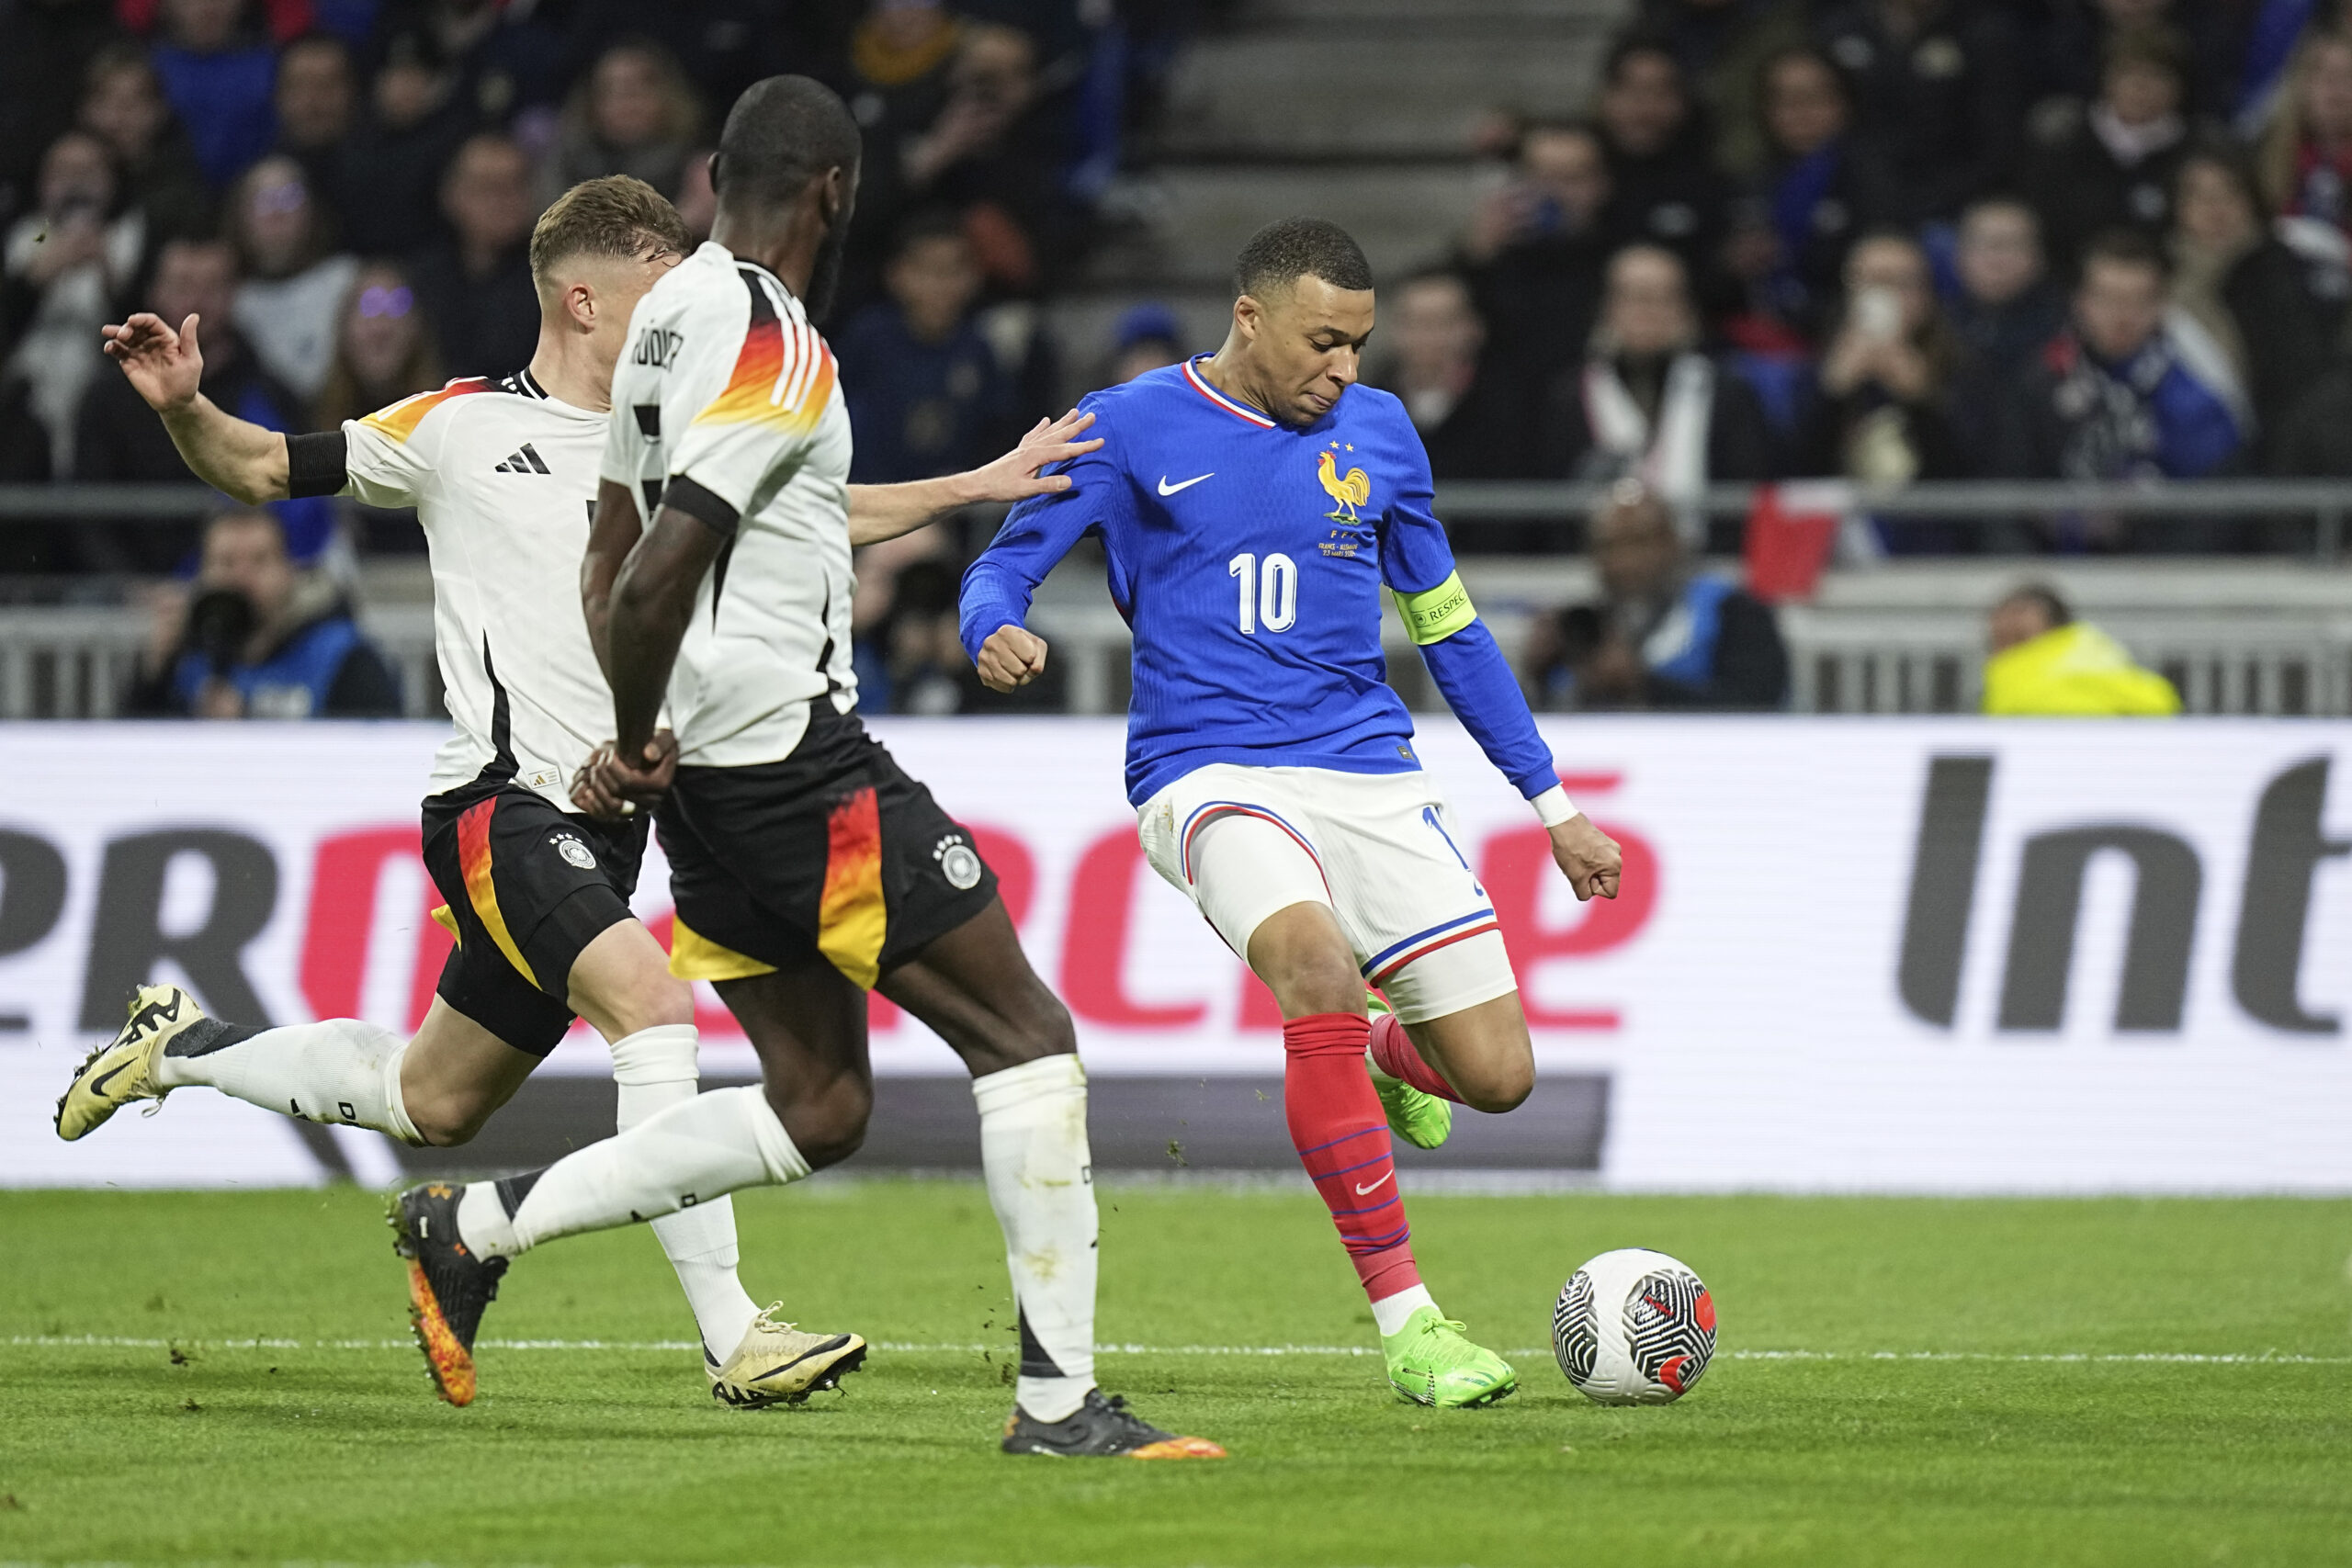 France’s Kylian Mbappe makes an attempt to score (Laurent Cipriani/AP)